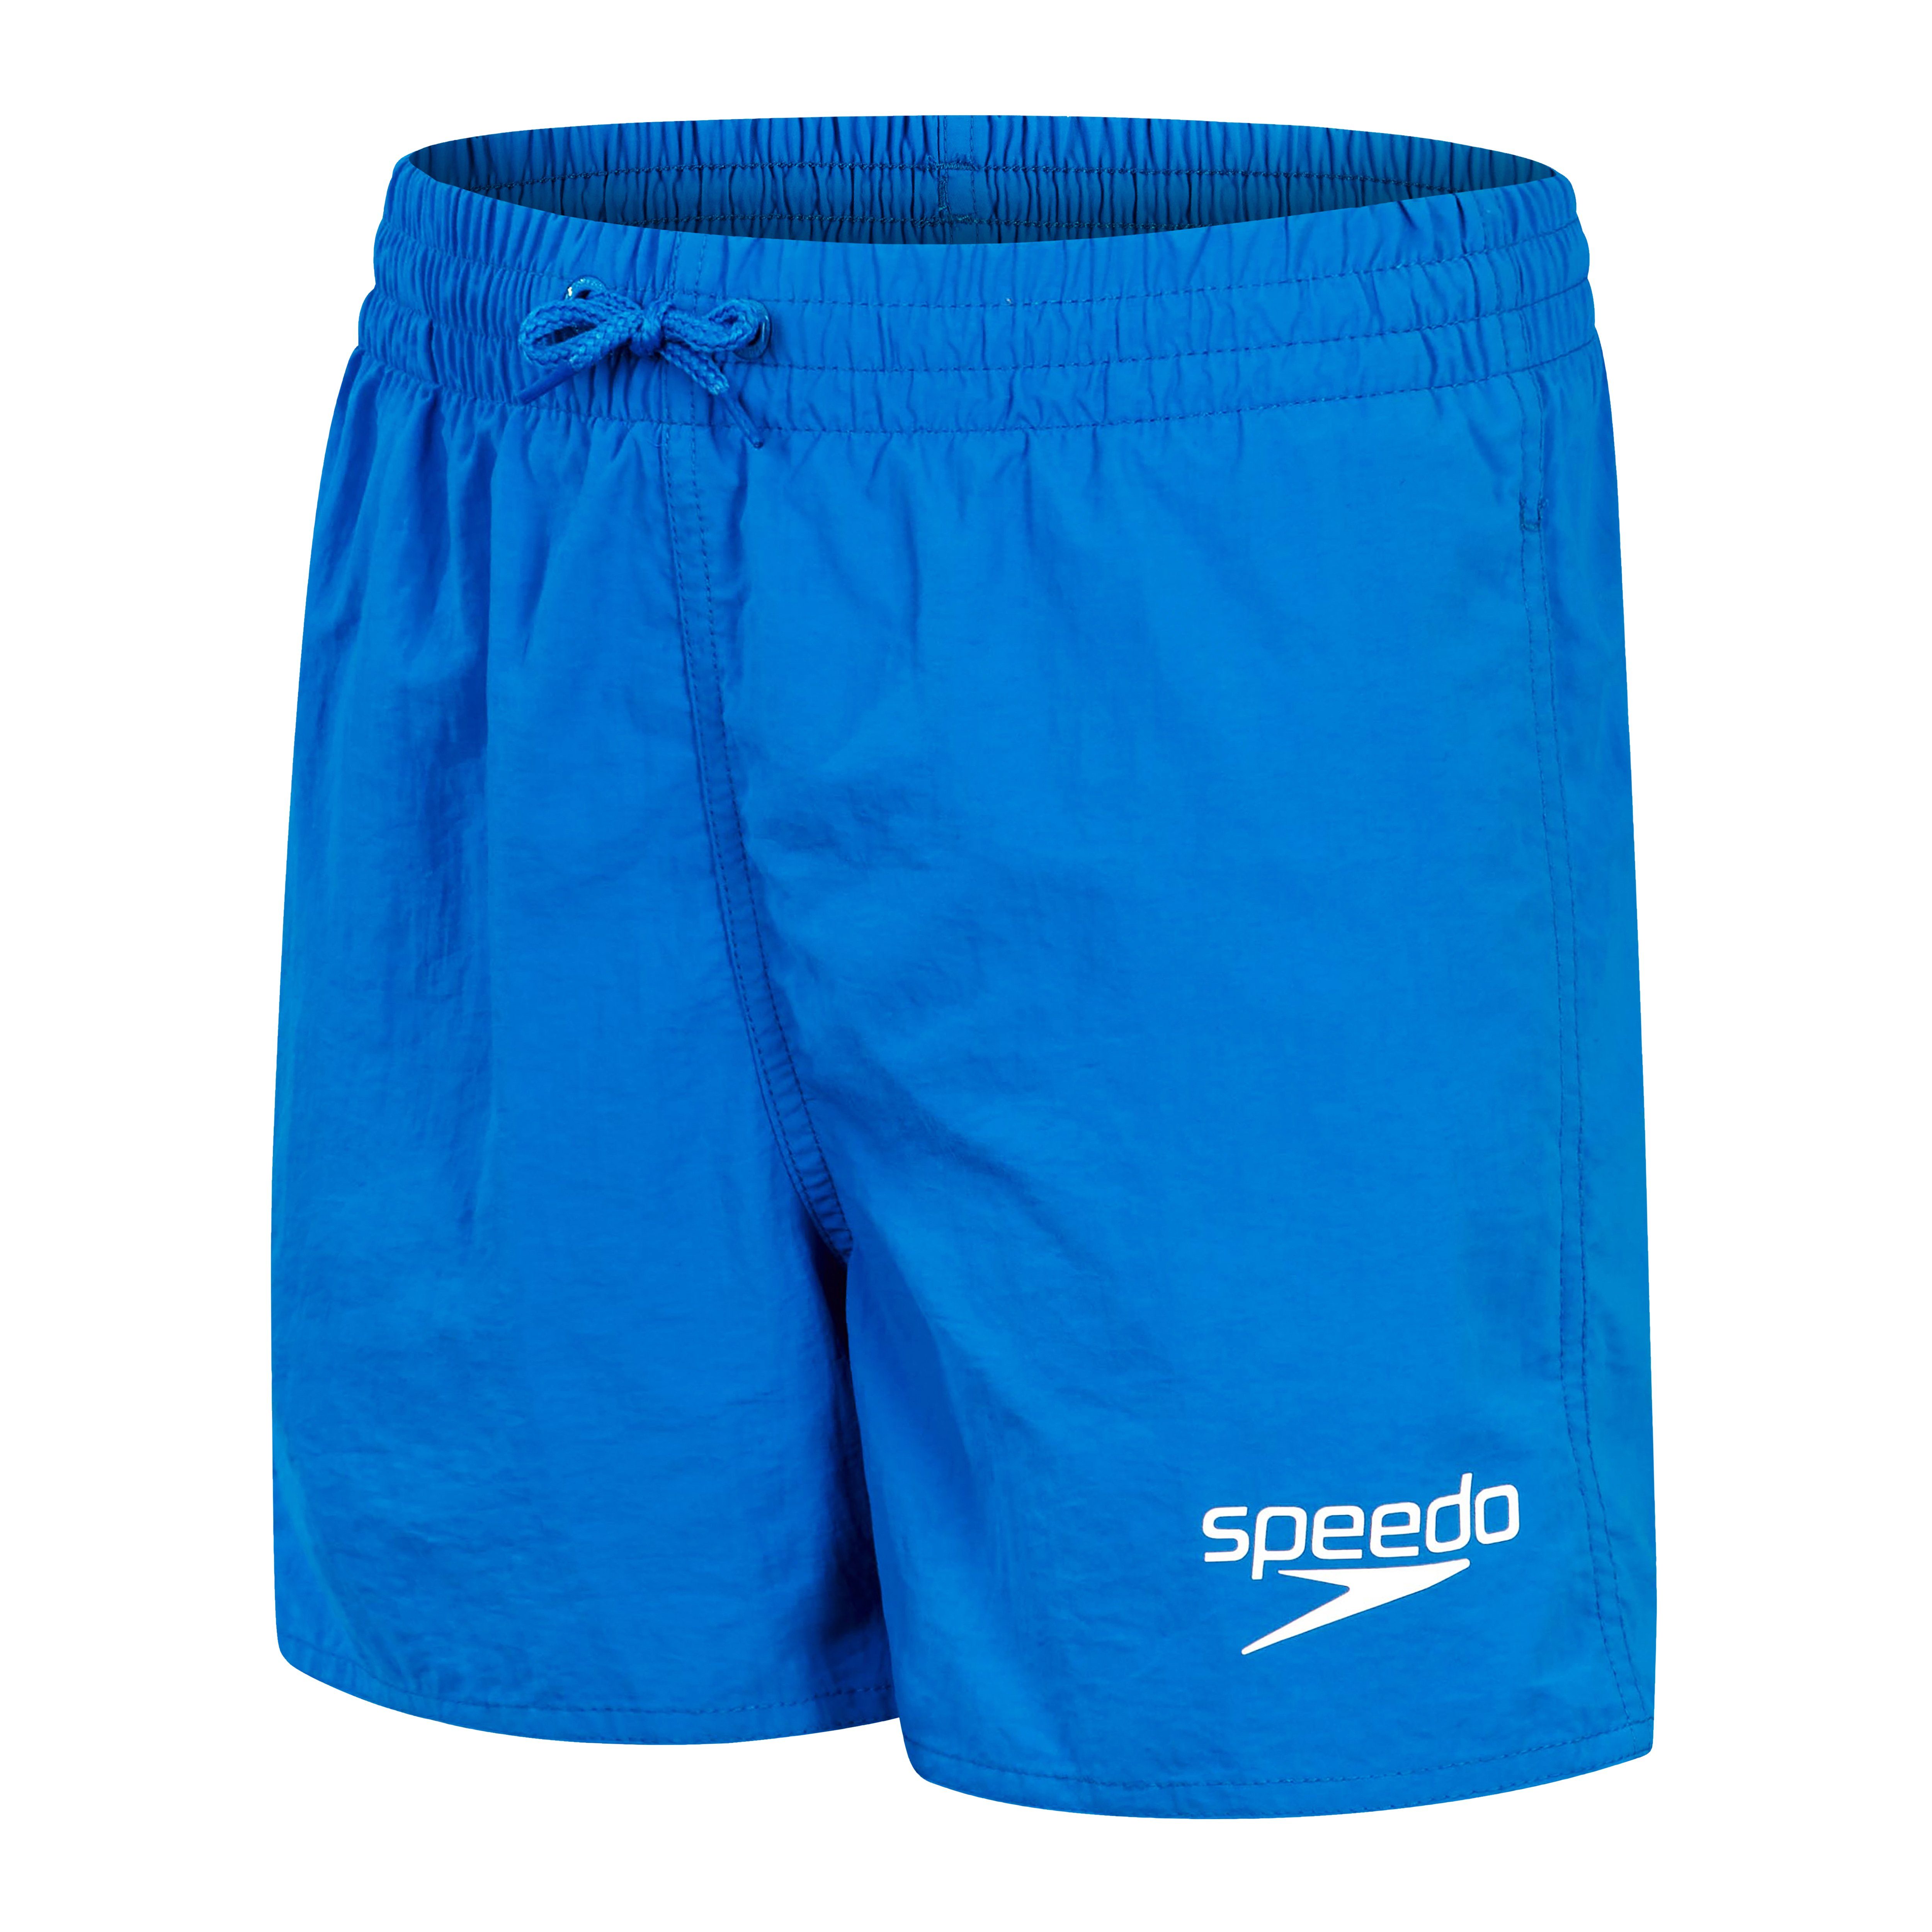 Speedo blau Verstellbare Passform Bade-Shorts John Kinder Badeshorts